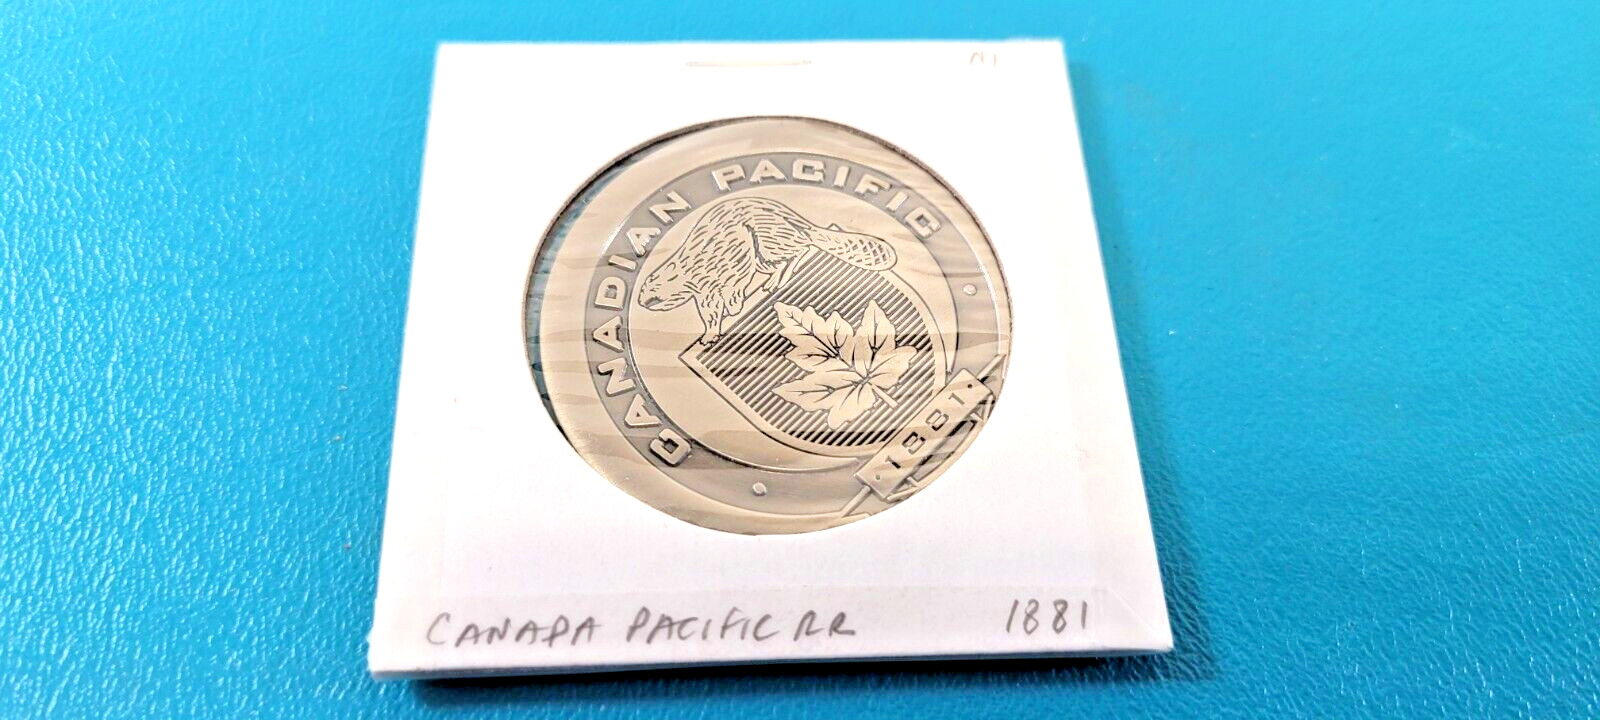 Canadian Pacific Railroad Challenge Coin Canada Silver CP Railroaders